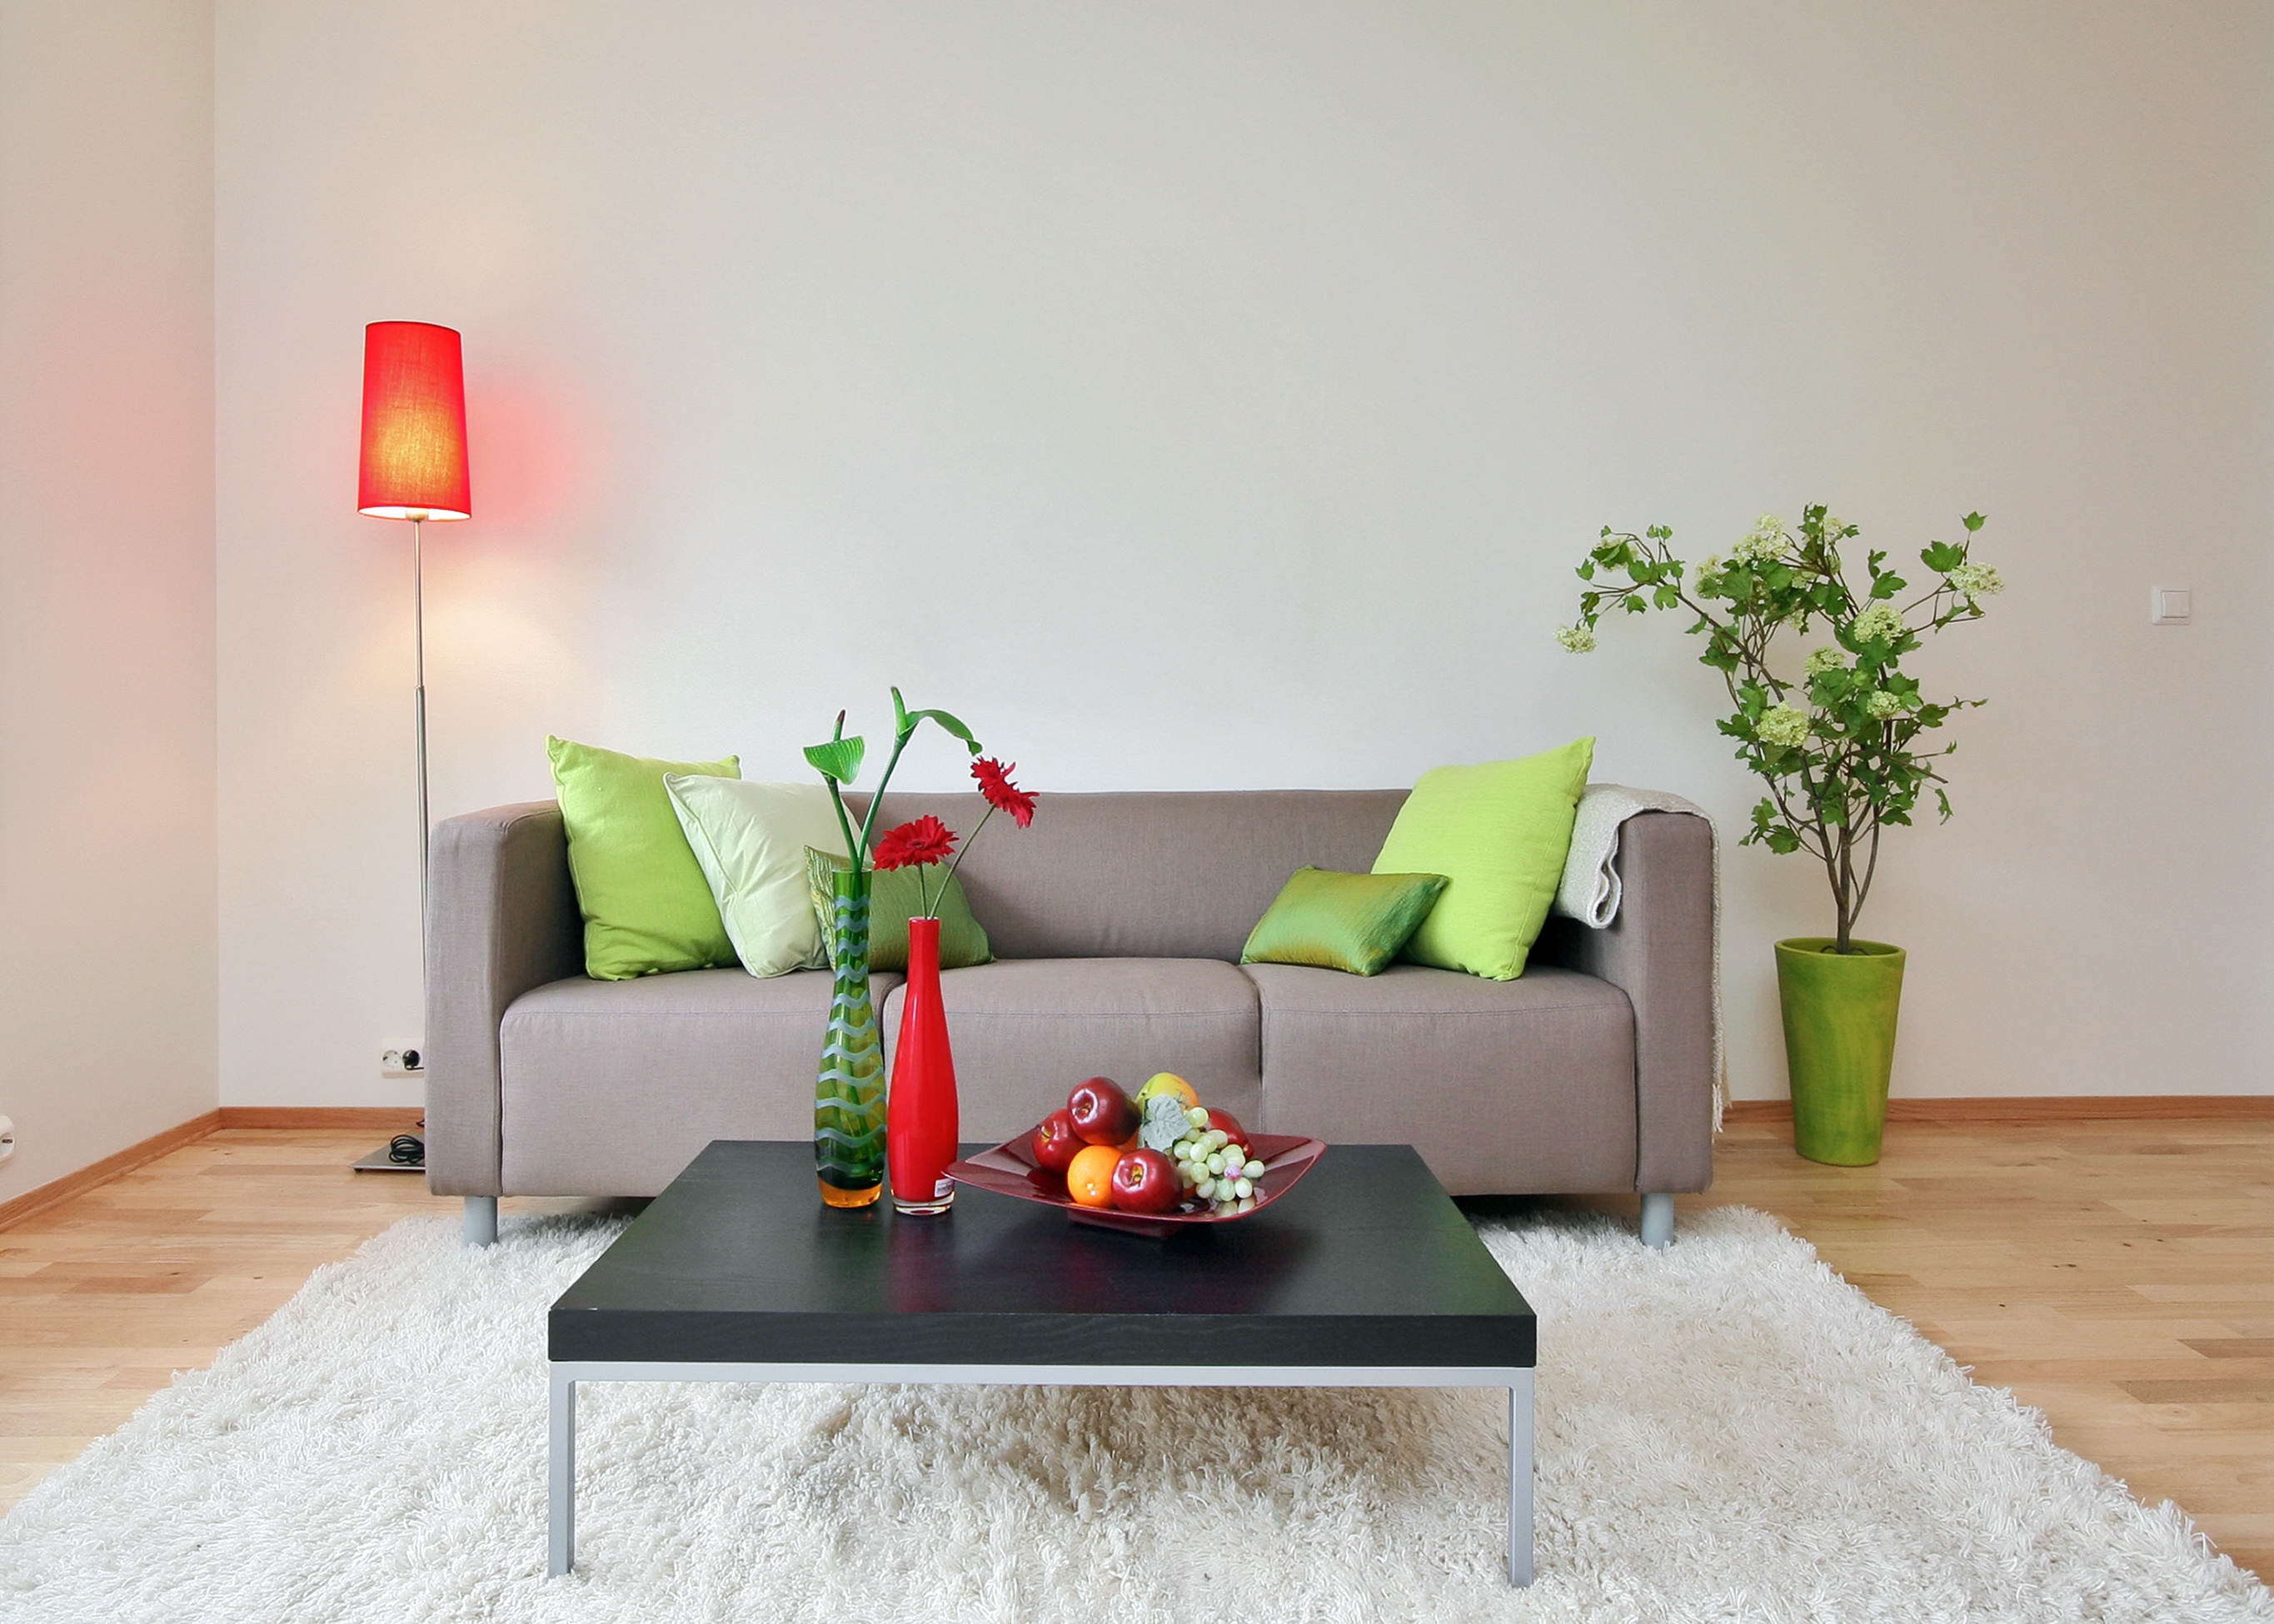 table, fruits, flowers, miscellanea, miscellaneous, living room, carpet cellphone